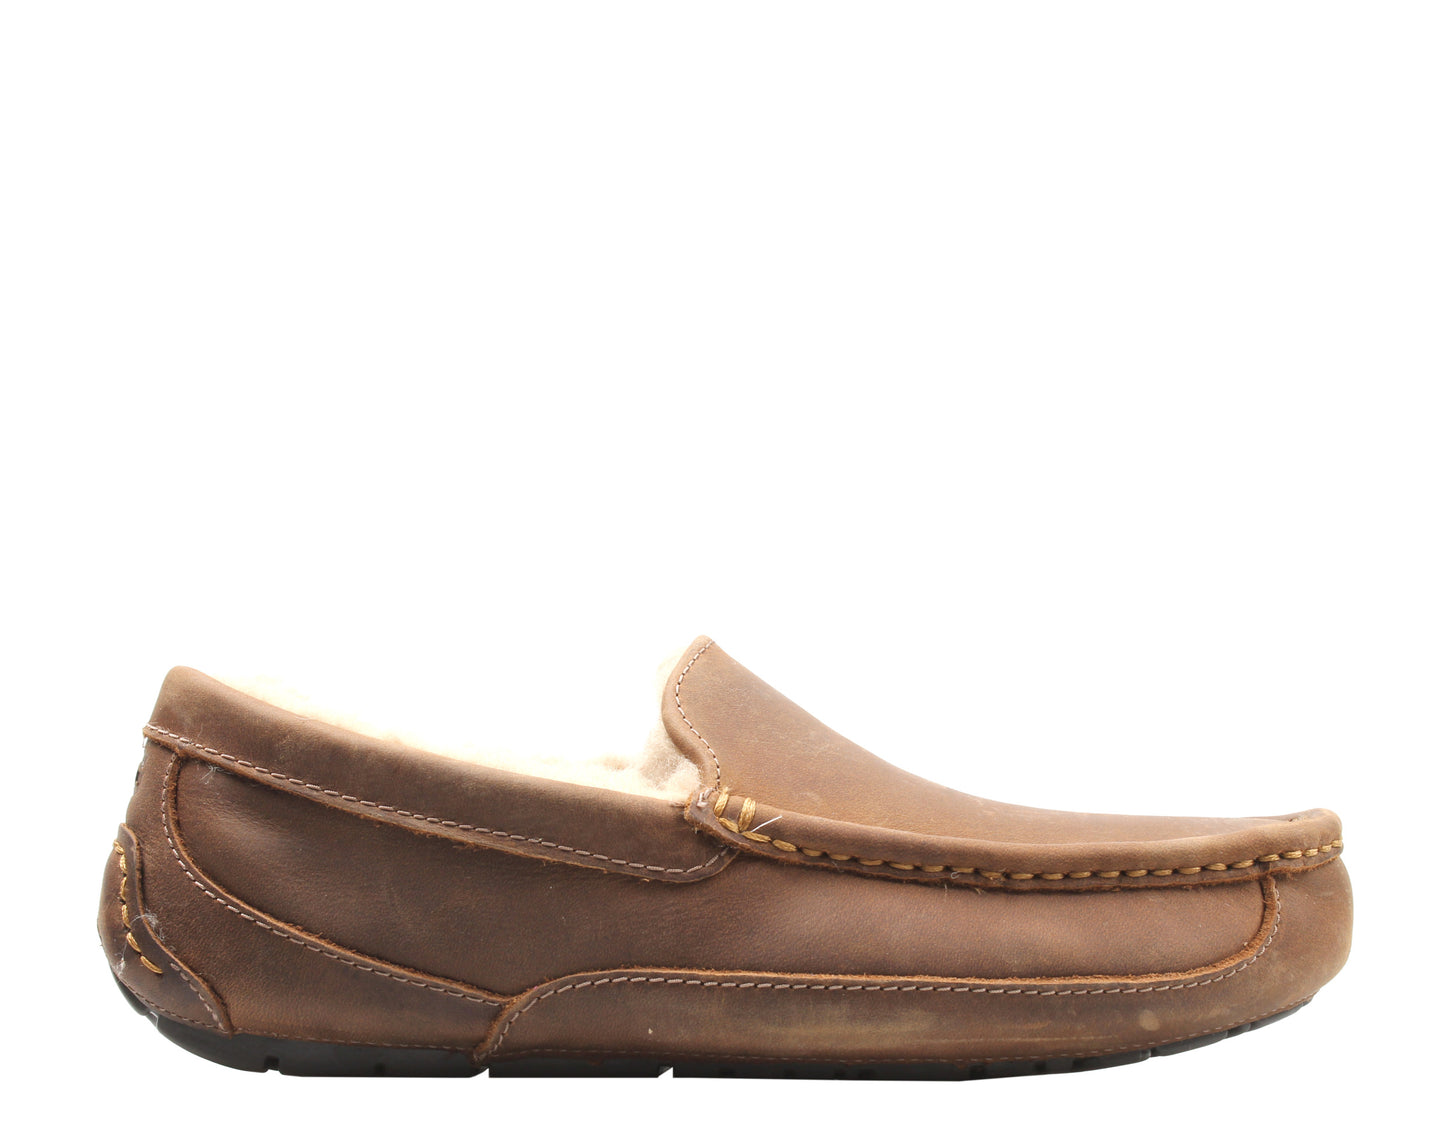 UGG Australia Ascot Leather Moccasin Tan Men's Slippers 1103889-TAN